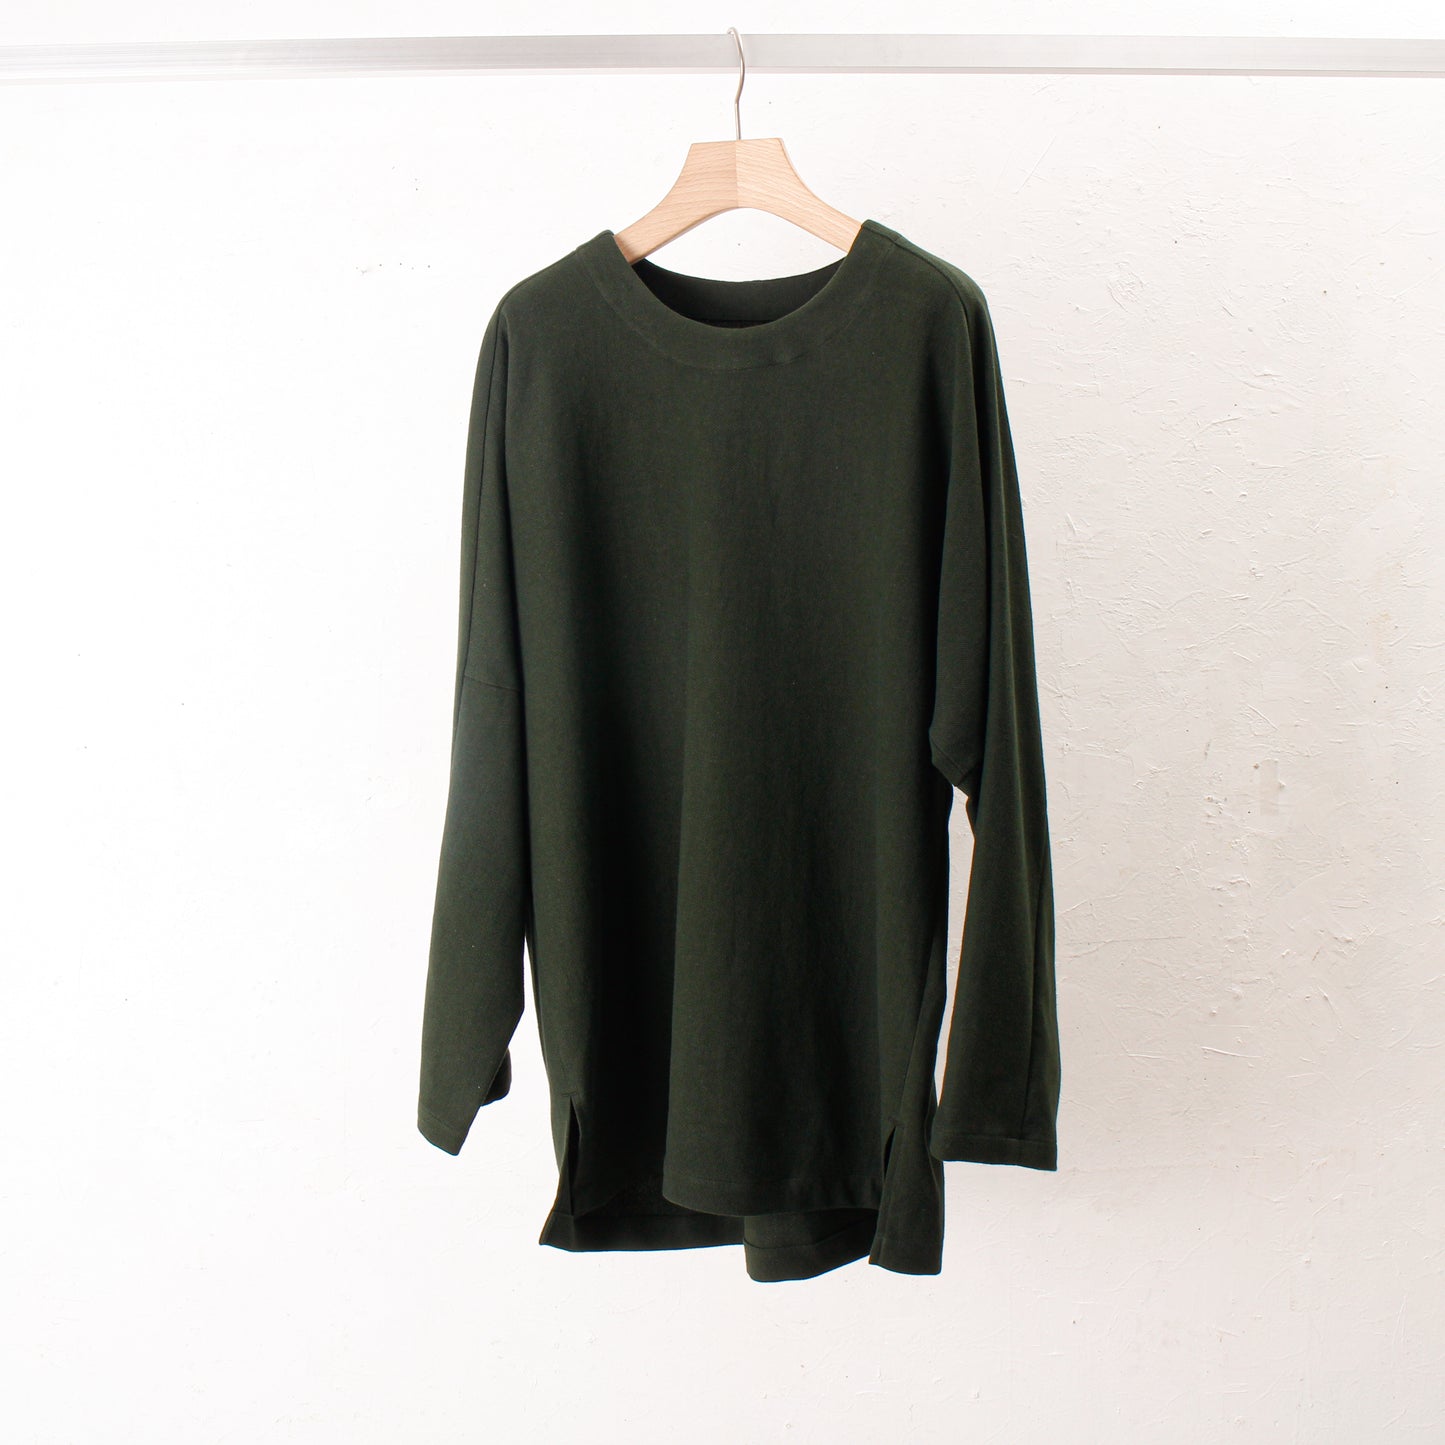 6ply KhadiCotton Long Pullover / khaki-green